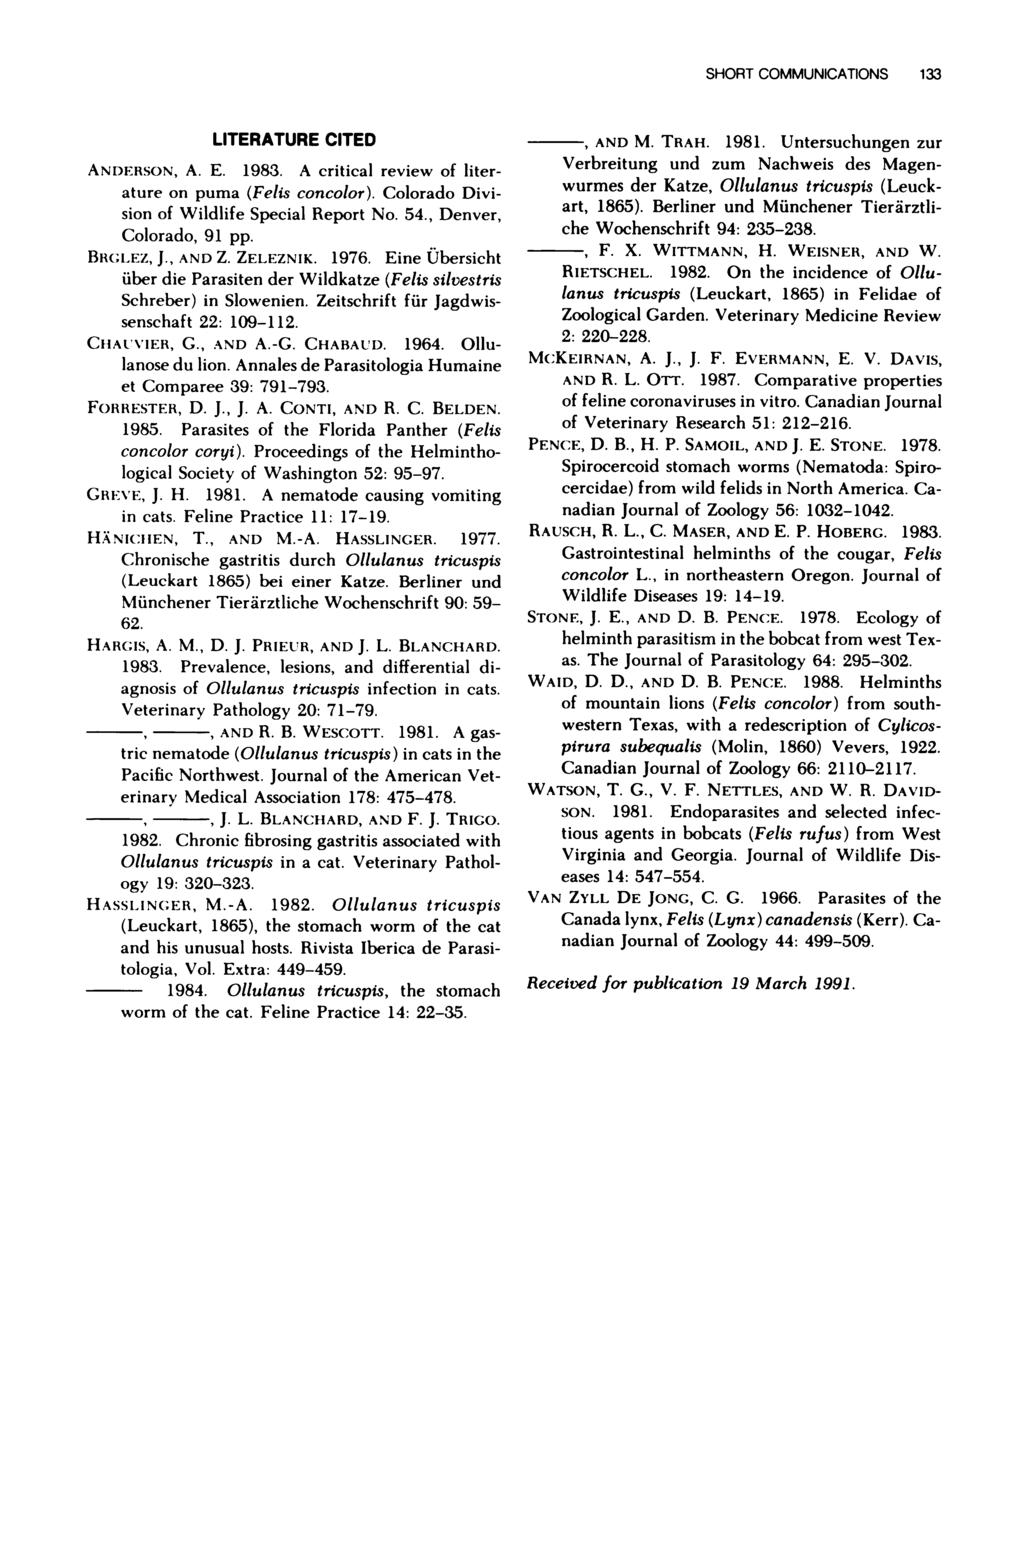 SHORT COMMUNICATIONS 133 LITERATURE CITED ANDERSON, A. E. 1983. A critical review of literature on puma (Felis concolor). Colorado Division of Wildlife Special Report No. 54., Denver, Colorado, 91 pp.